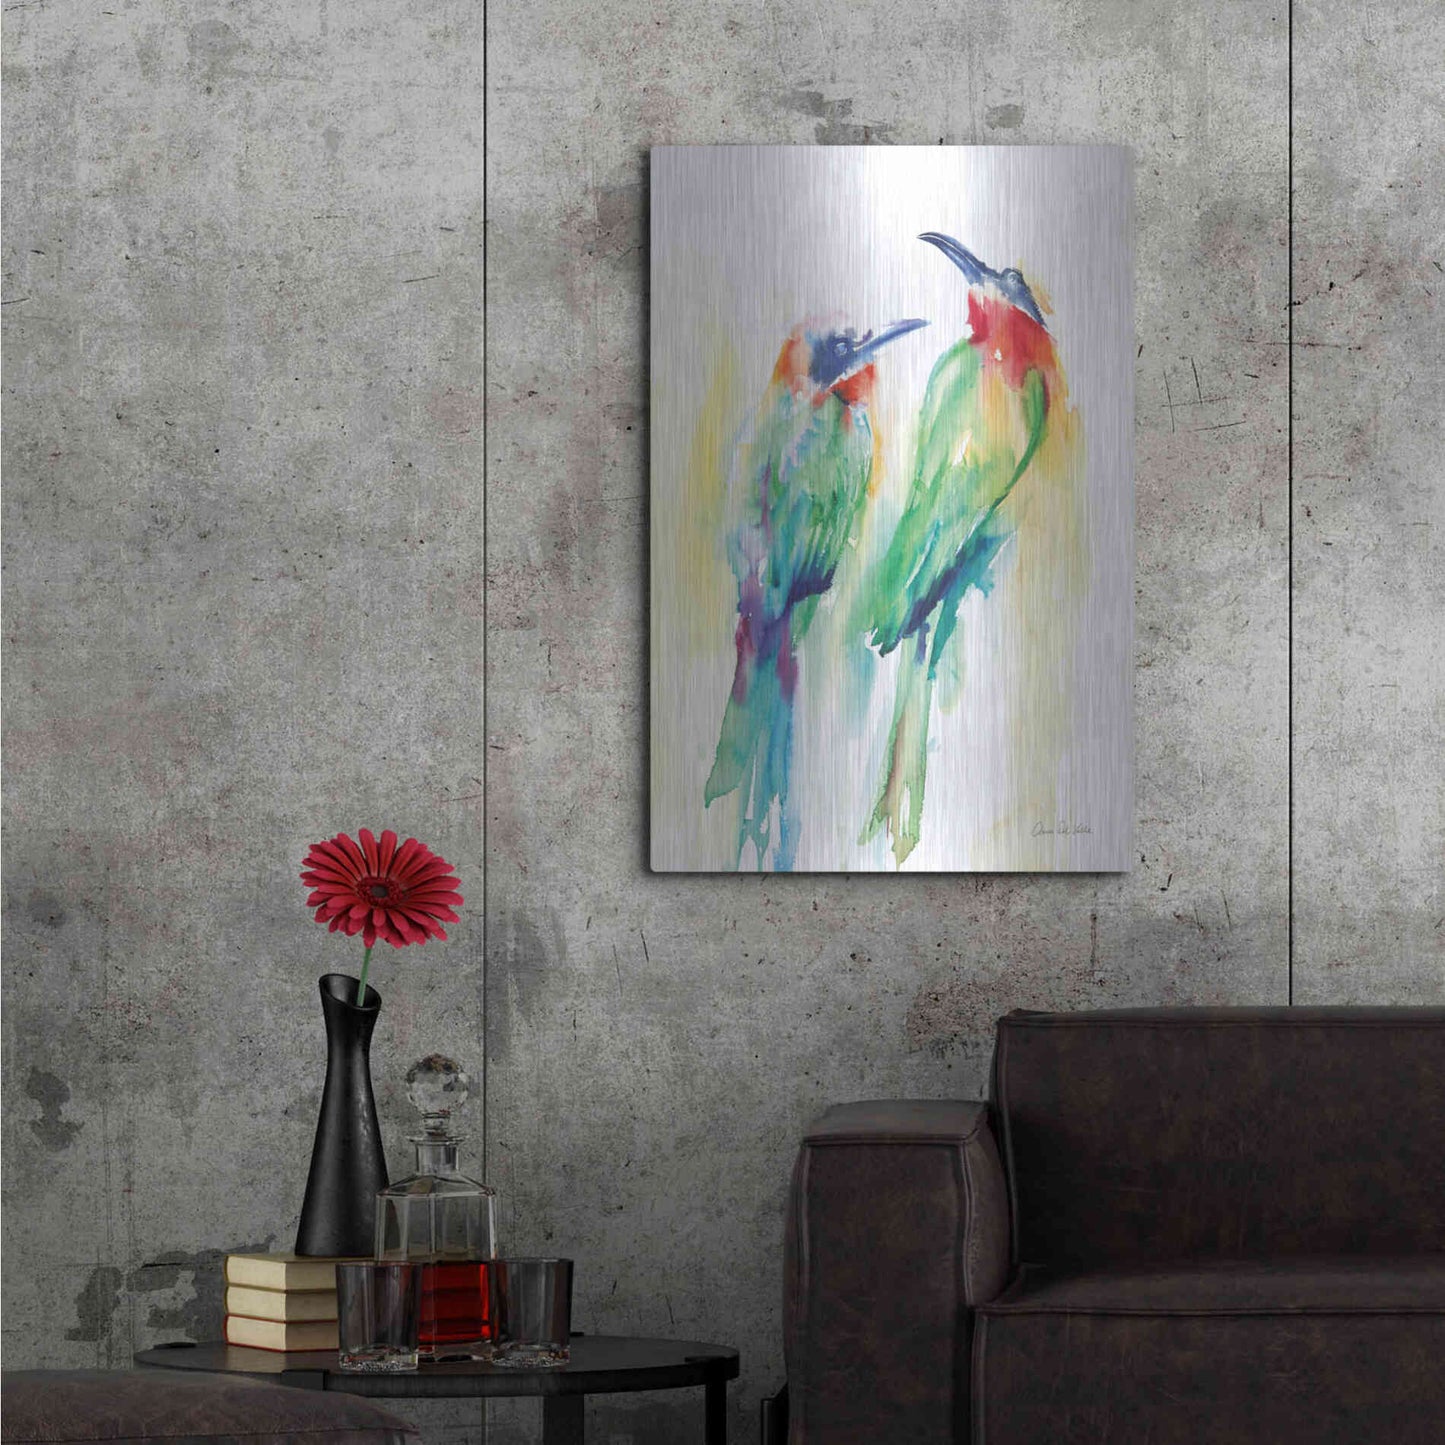 Luxe Metal Art 'Tropical Birds' by Alan Majchrowicz, Metal Wall Art,24x36